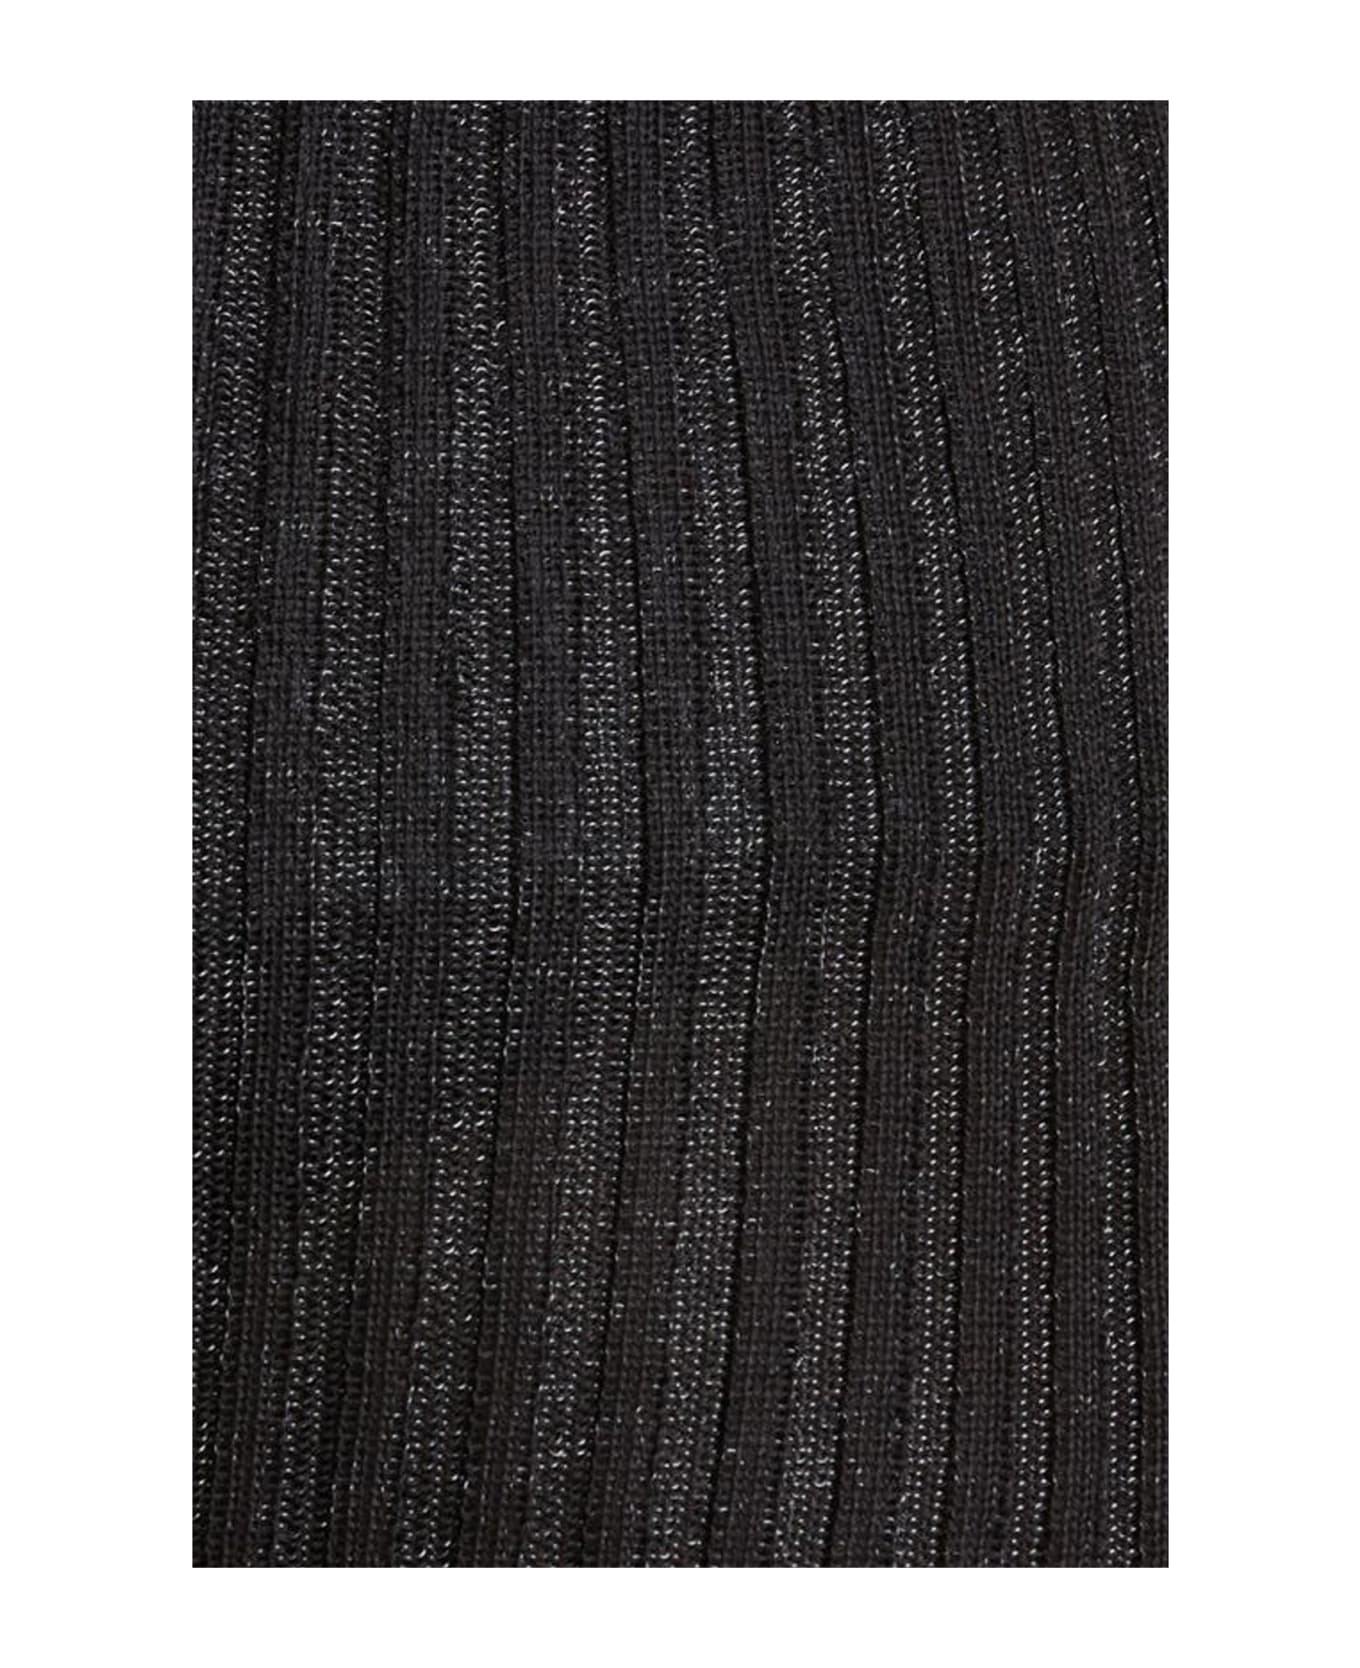 A. Roege Hove Emma Ribbed Knit Metallic Mini Skirt - Black